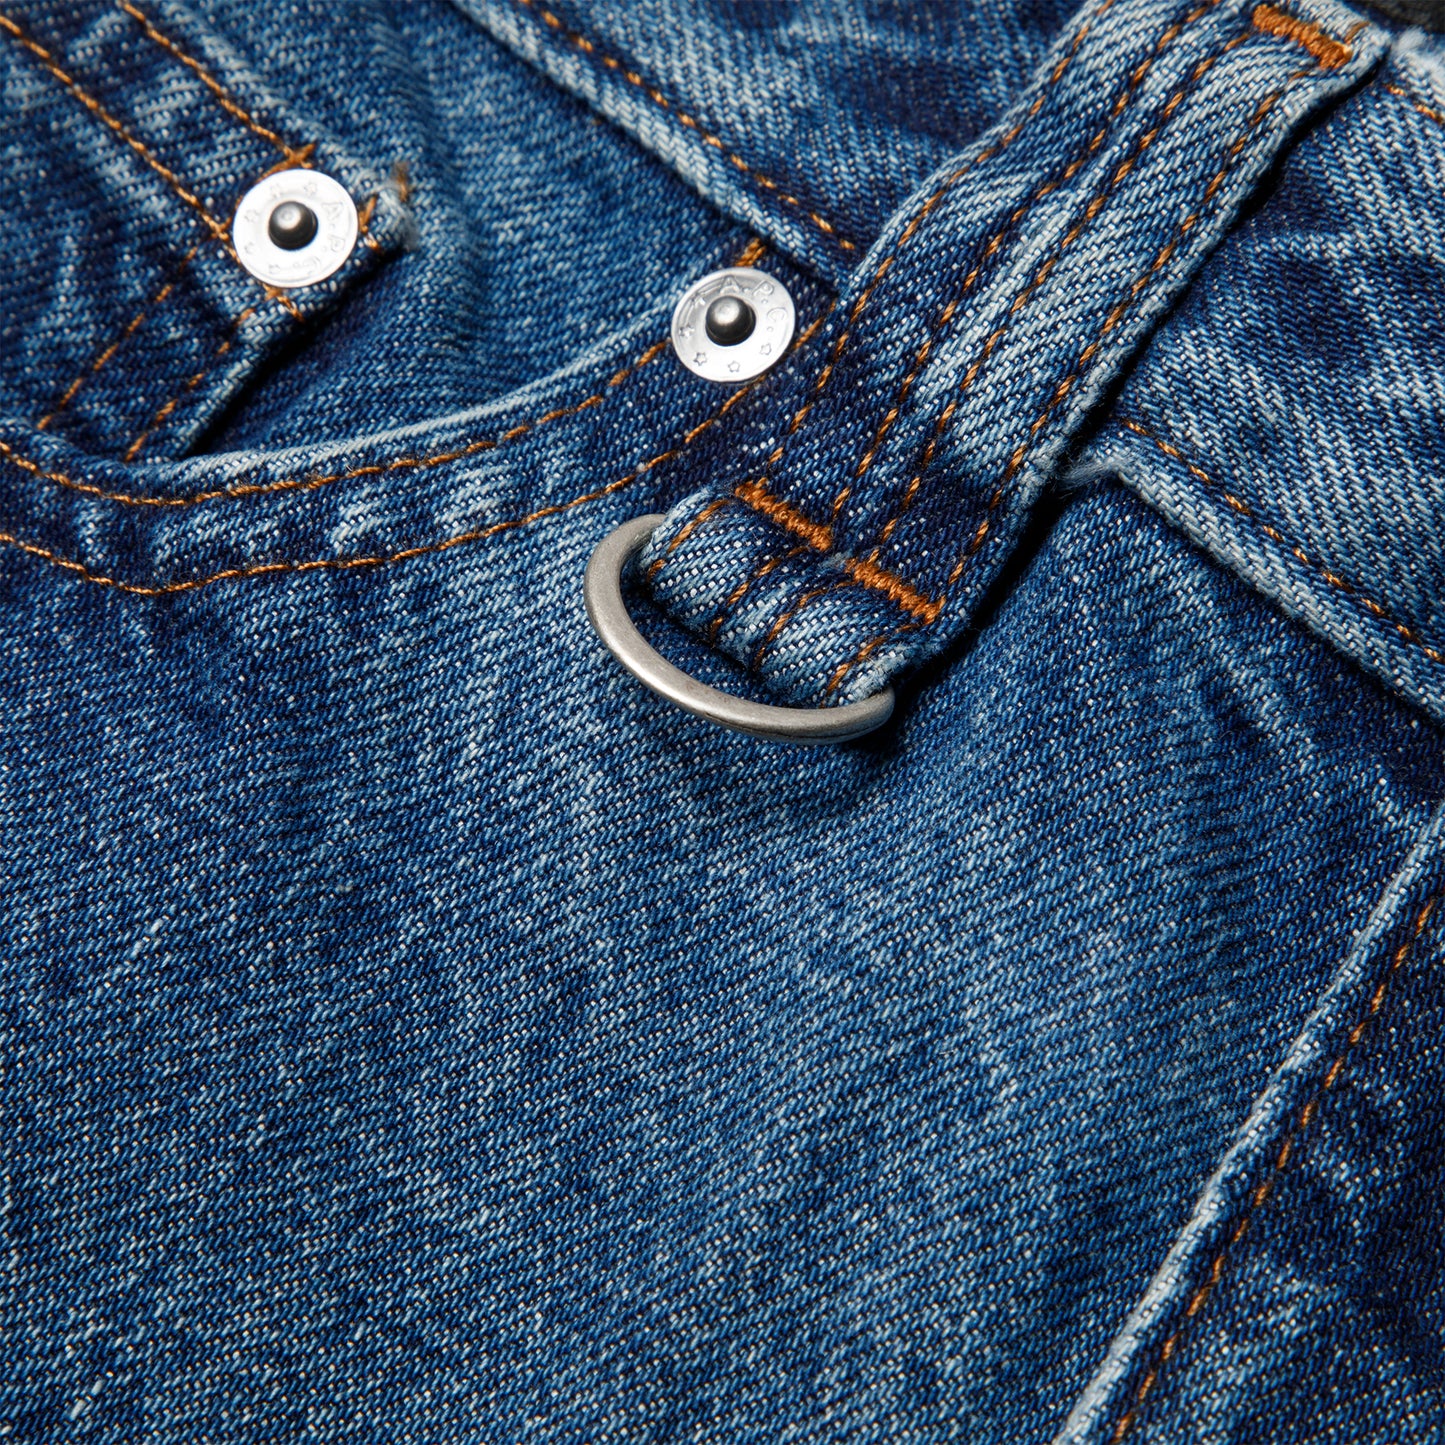 A.P.C. Ayrton Jeans (Stonewashed Indigo)